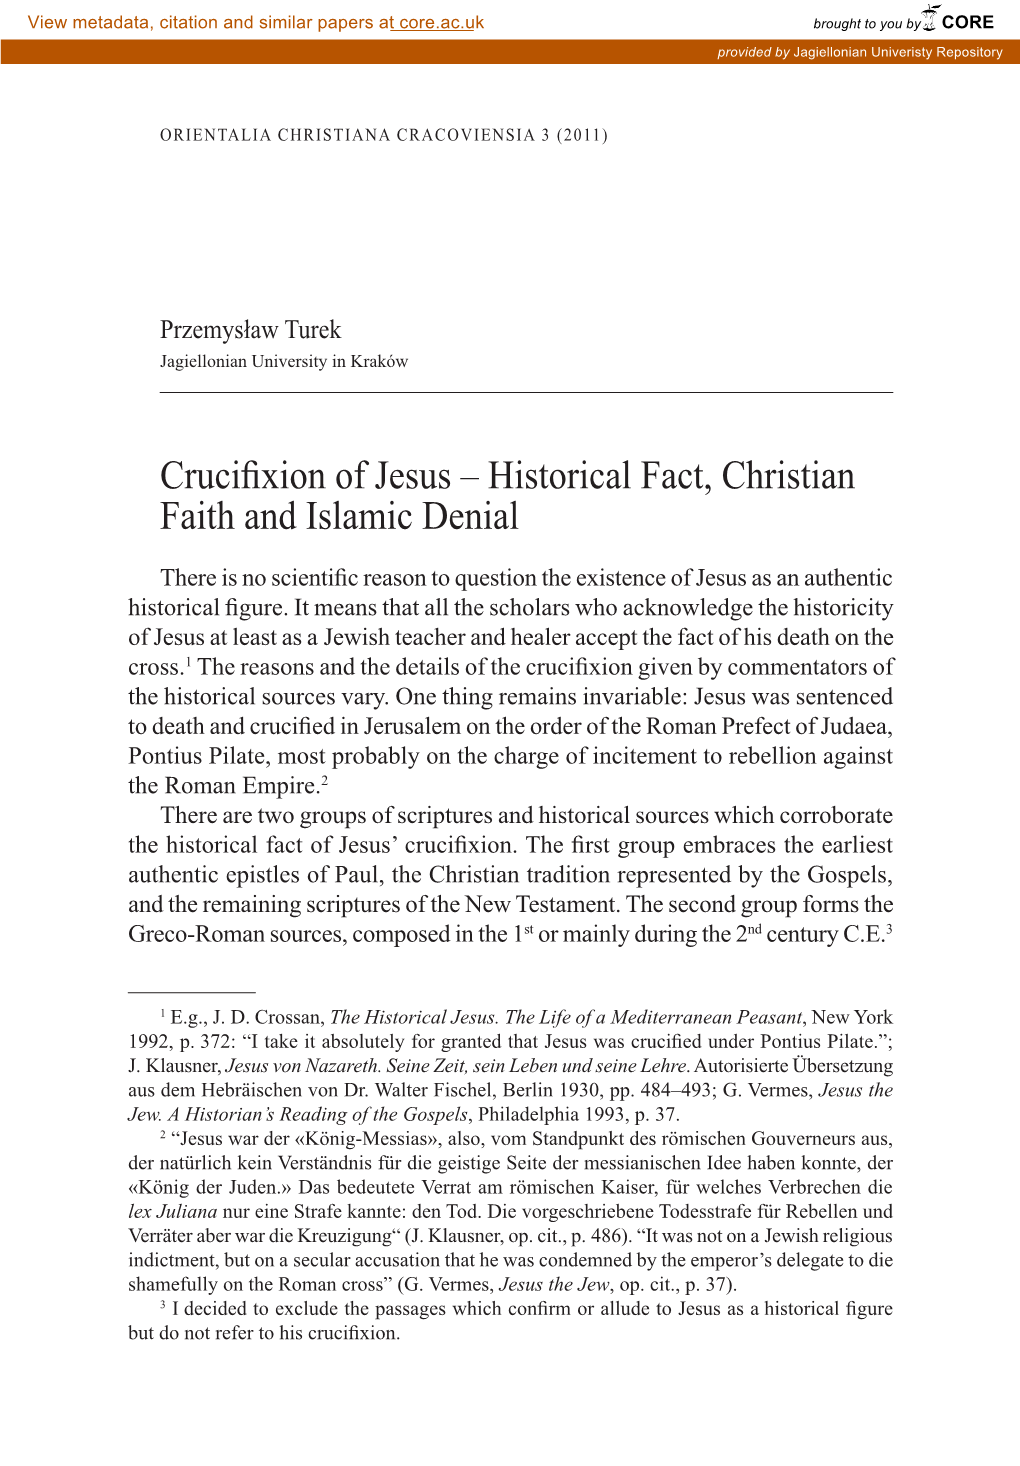 Crucifixion of Jesus – Historical Fact, Christian Faith and Islamic Denial